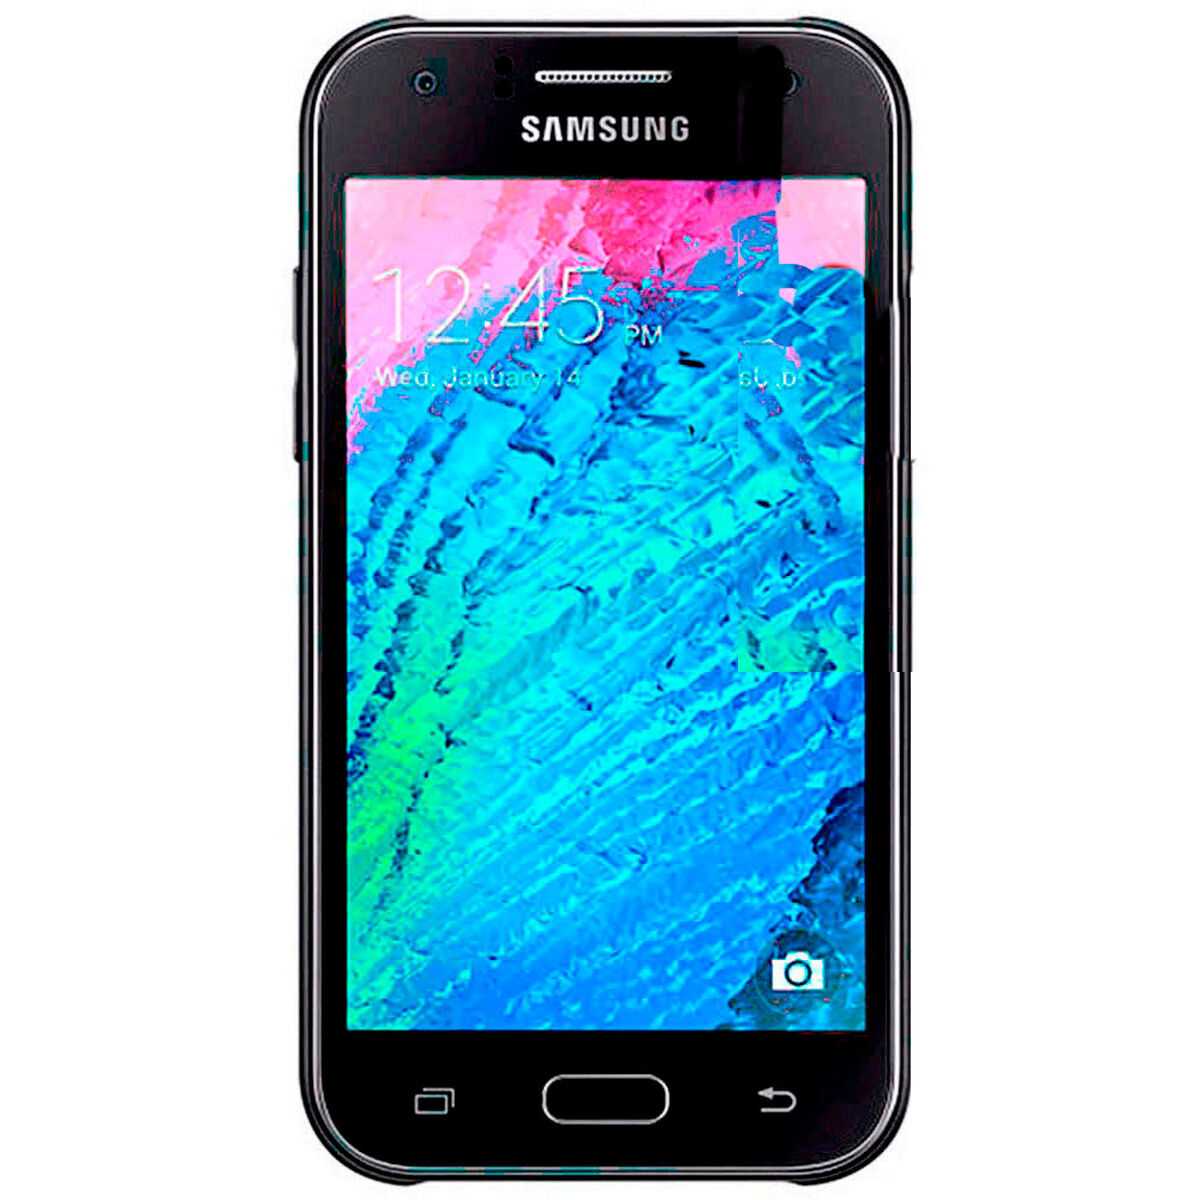 Celular Samsung Galaxy J1 LTE 4,3'' Negro Movistar